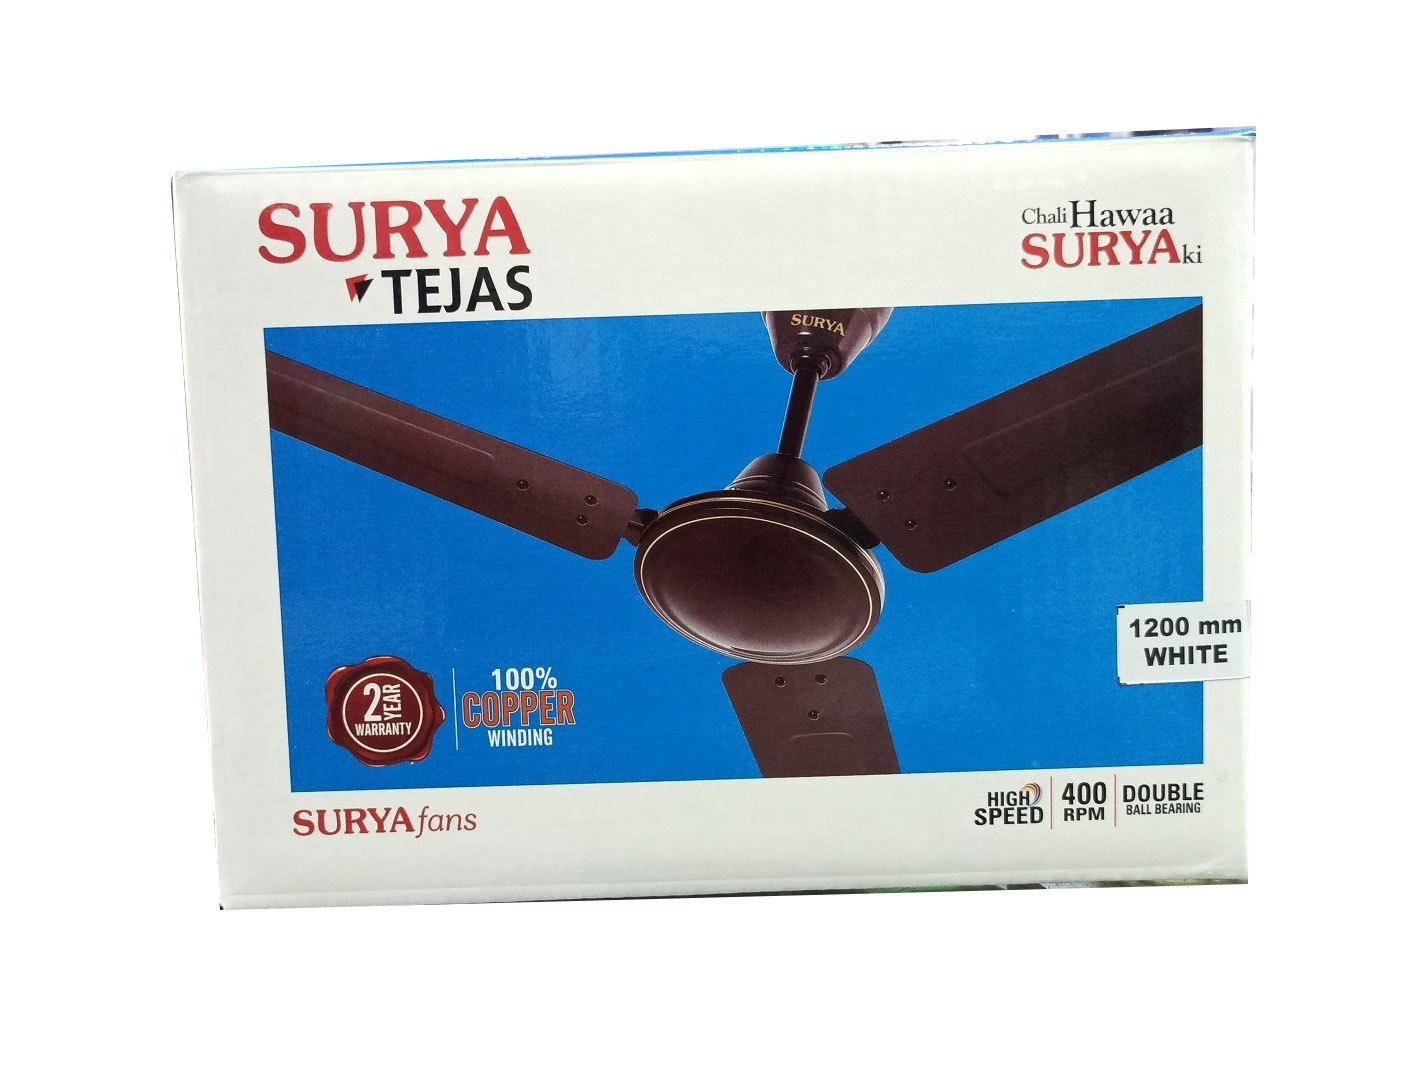 surya ceiling fan price